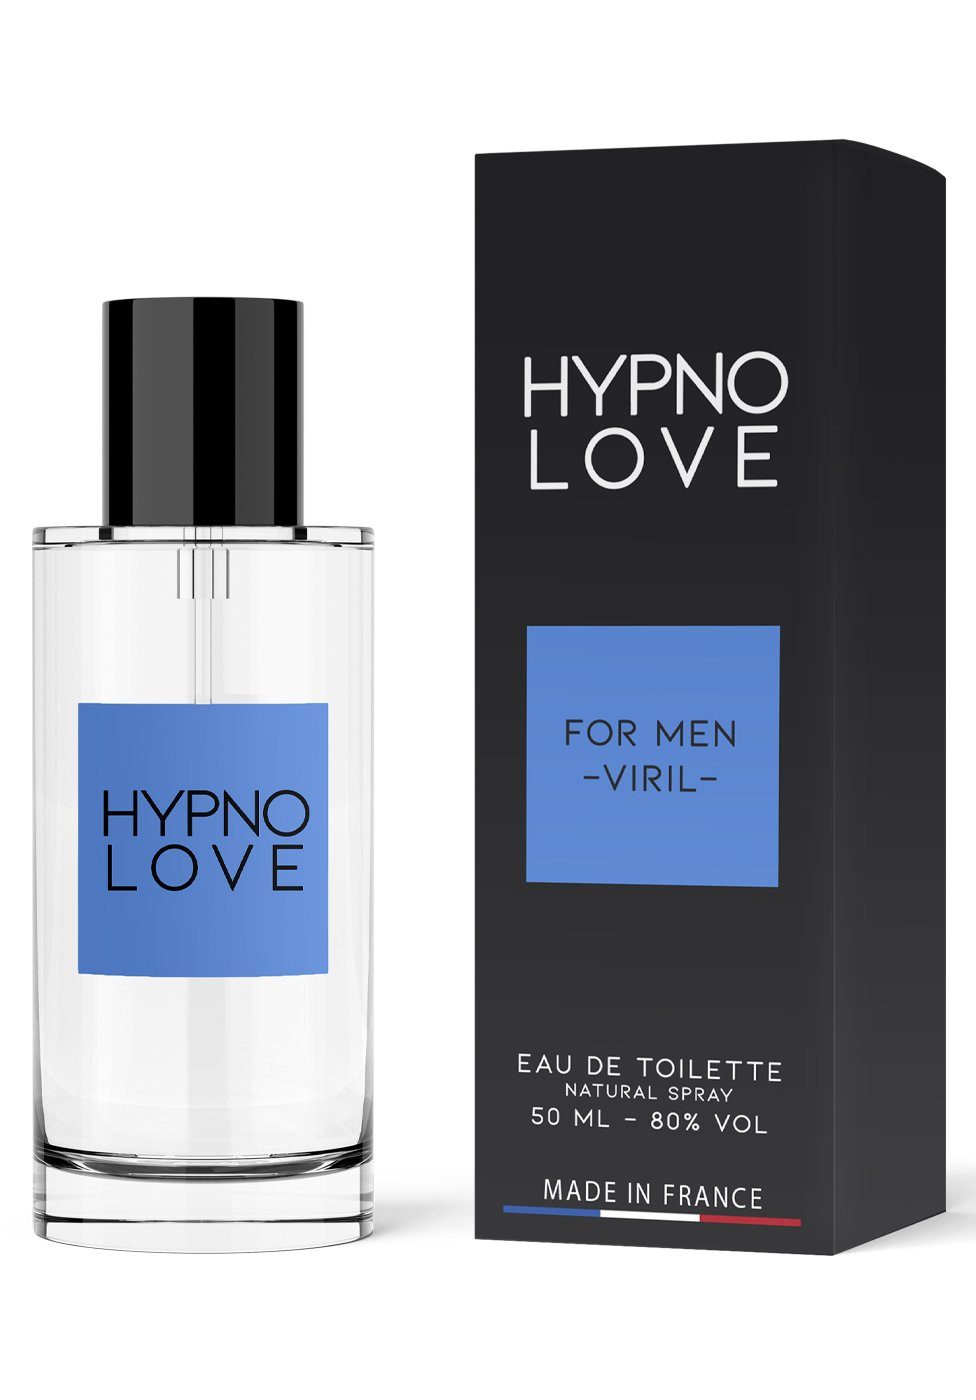 Ruf Men for Parfum de Hypno-Love Parfum Eau